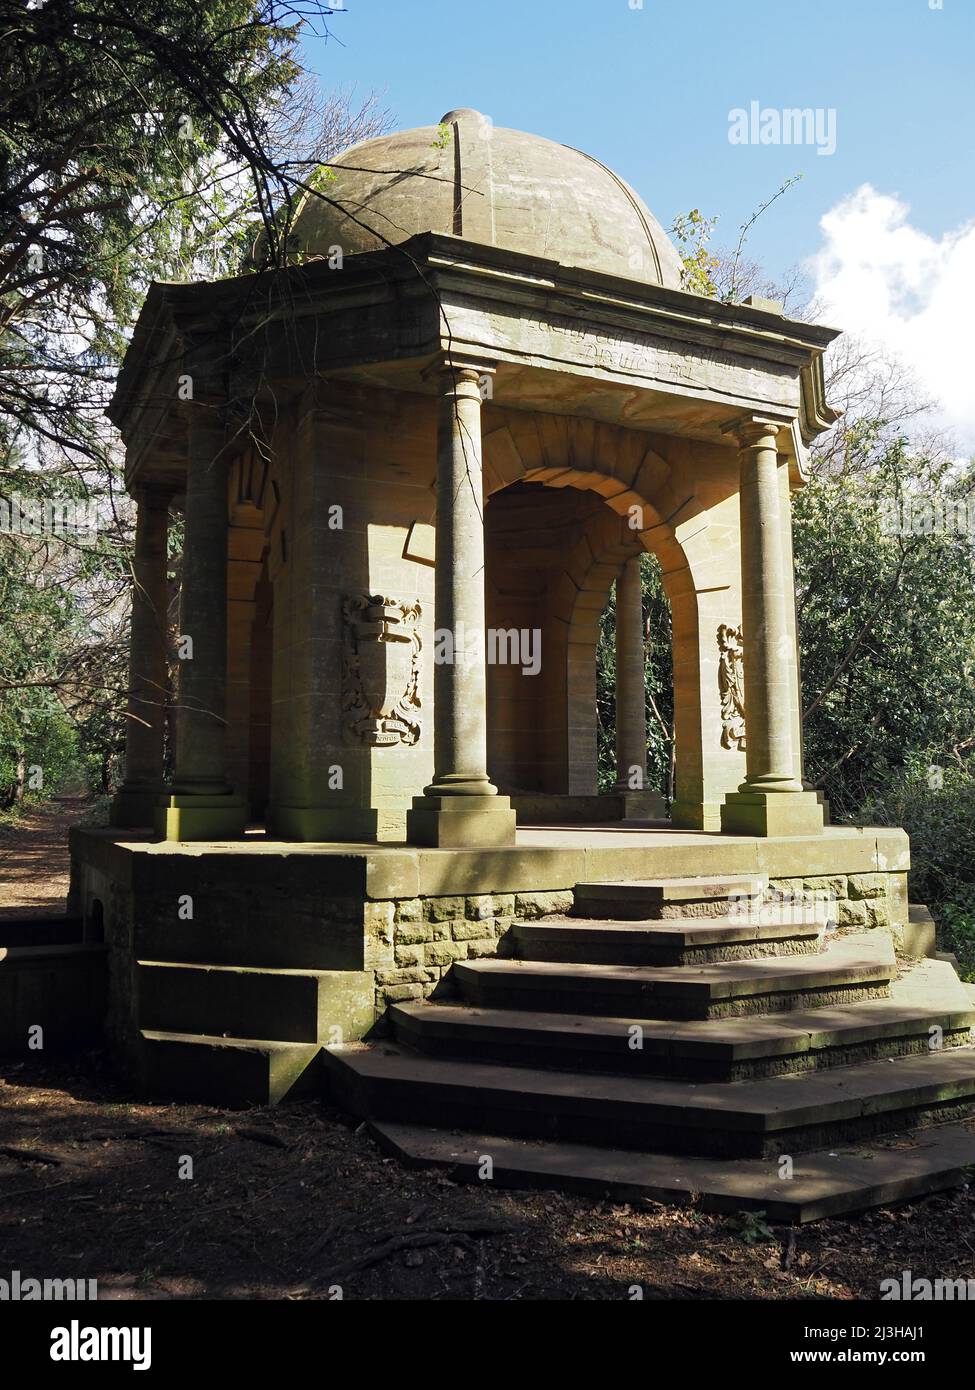 Sir Henry Samuelson Mausoleum 'Temple of sleep' Wisley and Ockham Common, Chatley Heath, Surrey, UK. Stock Photo